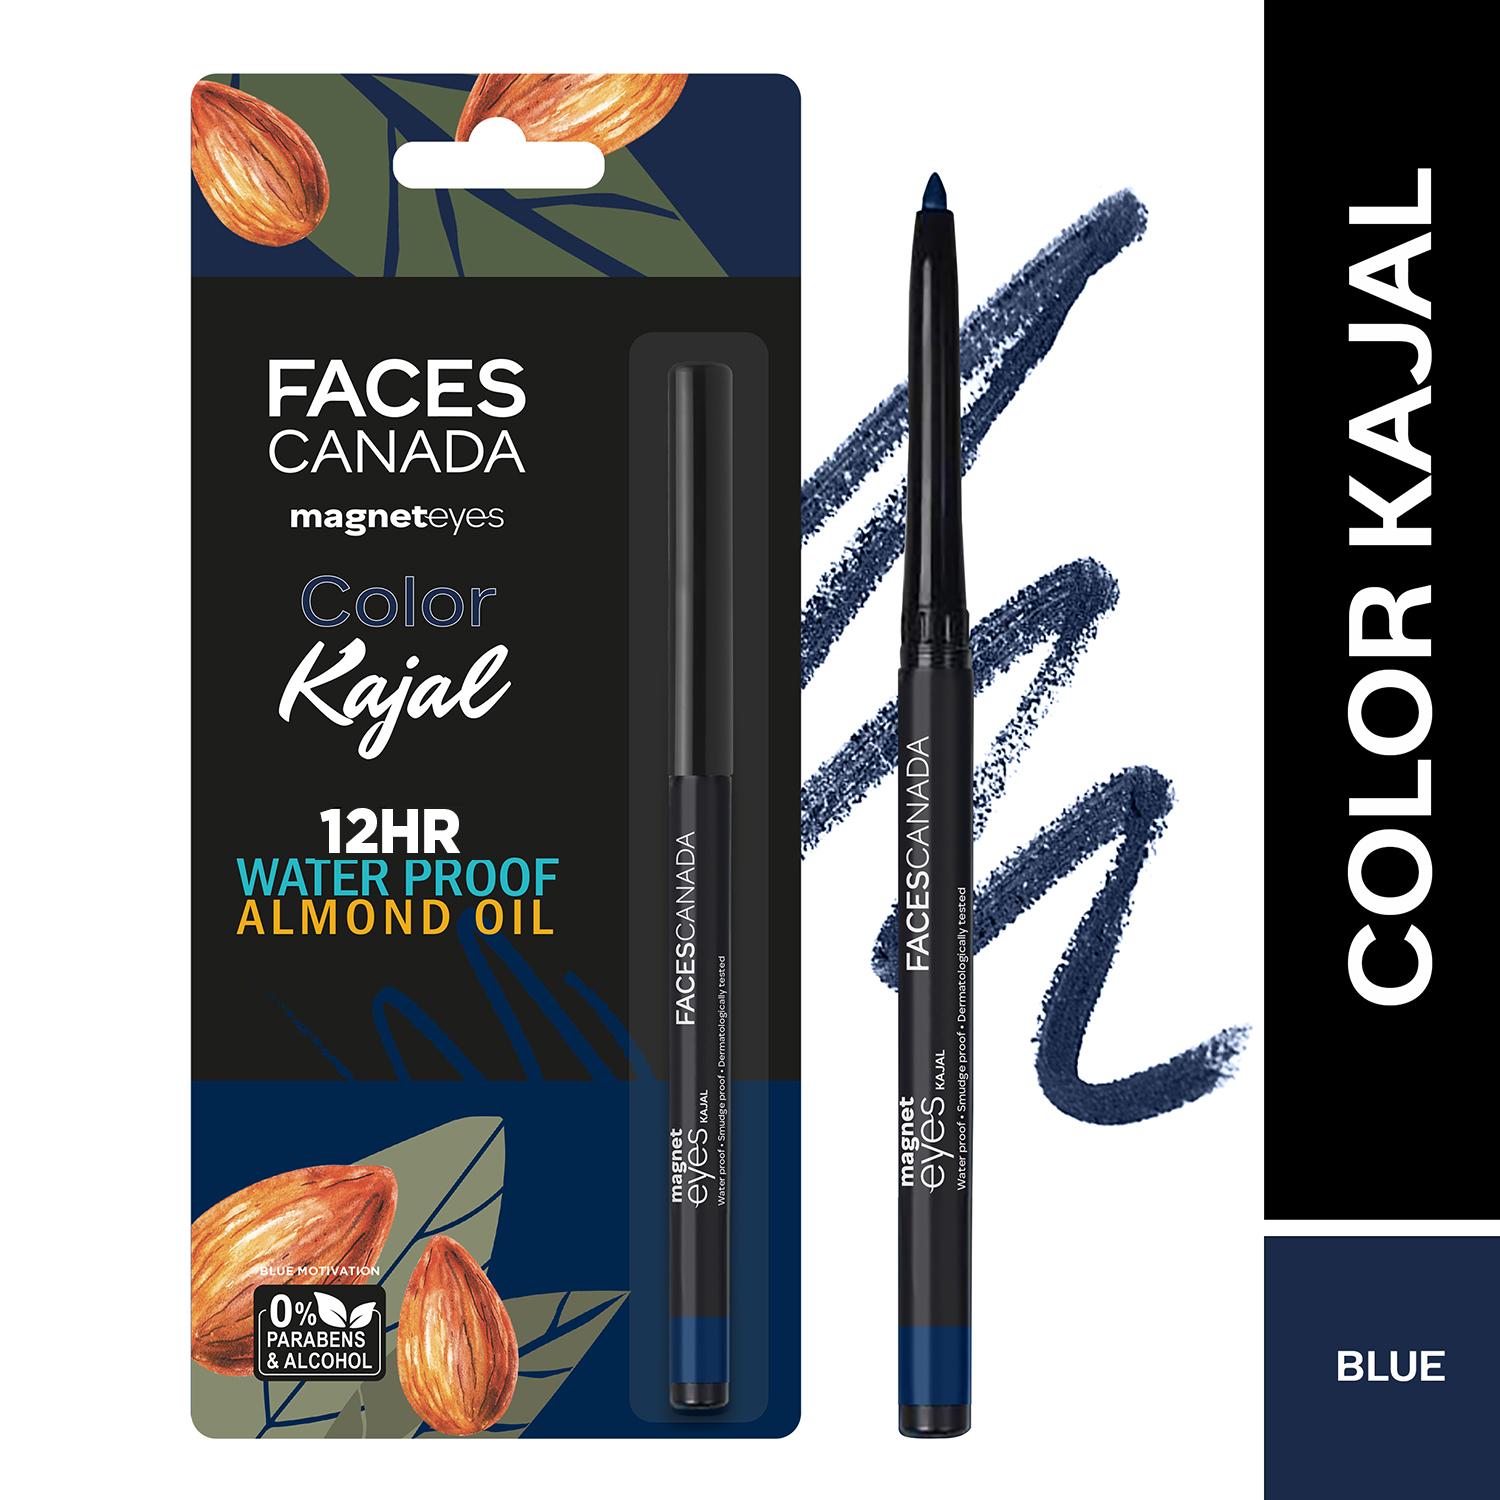 Faces Canada | Faces Canada Magneteyes Color Kajal, 12 HR Stay, Matte Finish,Water Proof -Blue Motivation 01 (0.30 g)